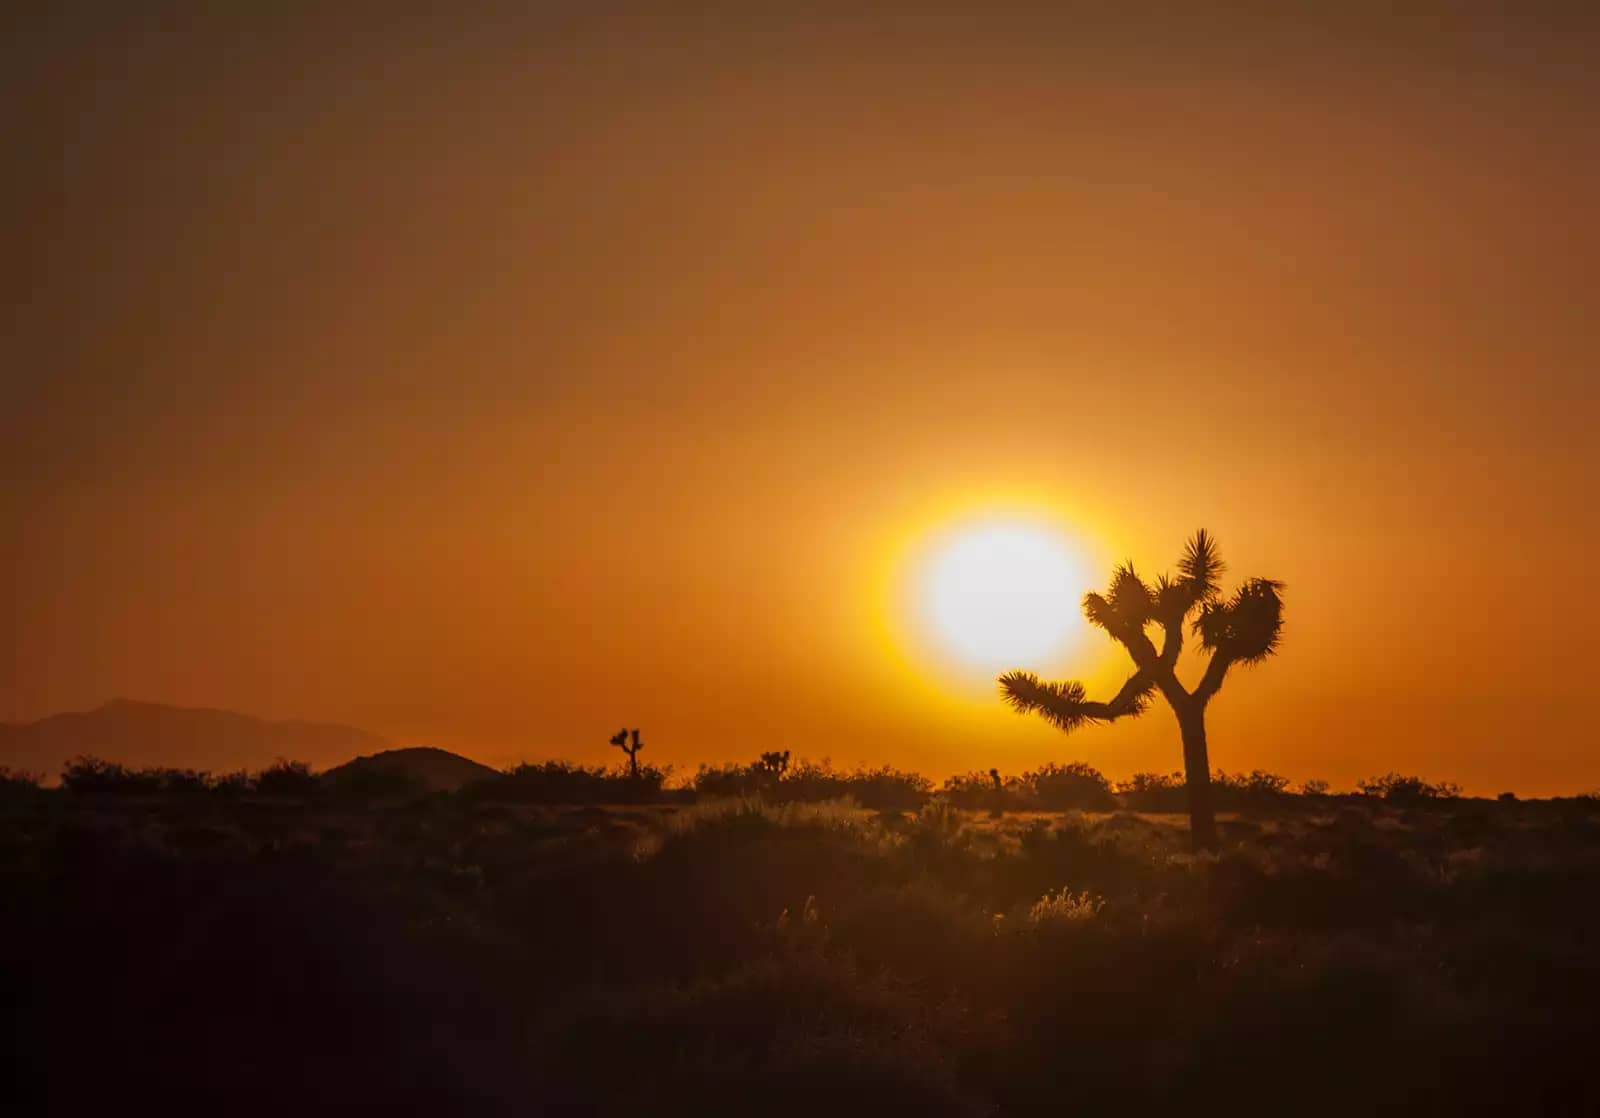 A glowing orange sunset behind a Joshua Tree in a dark open desert.